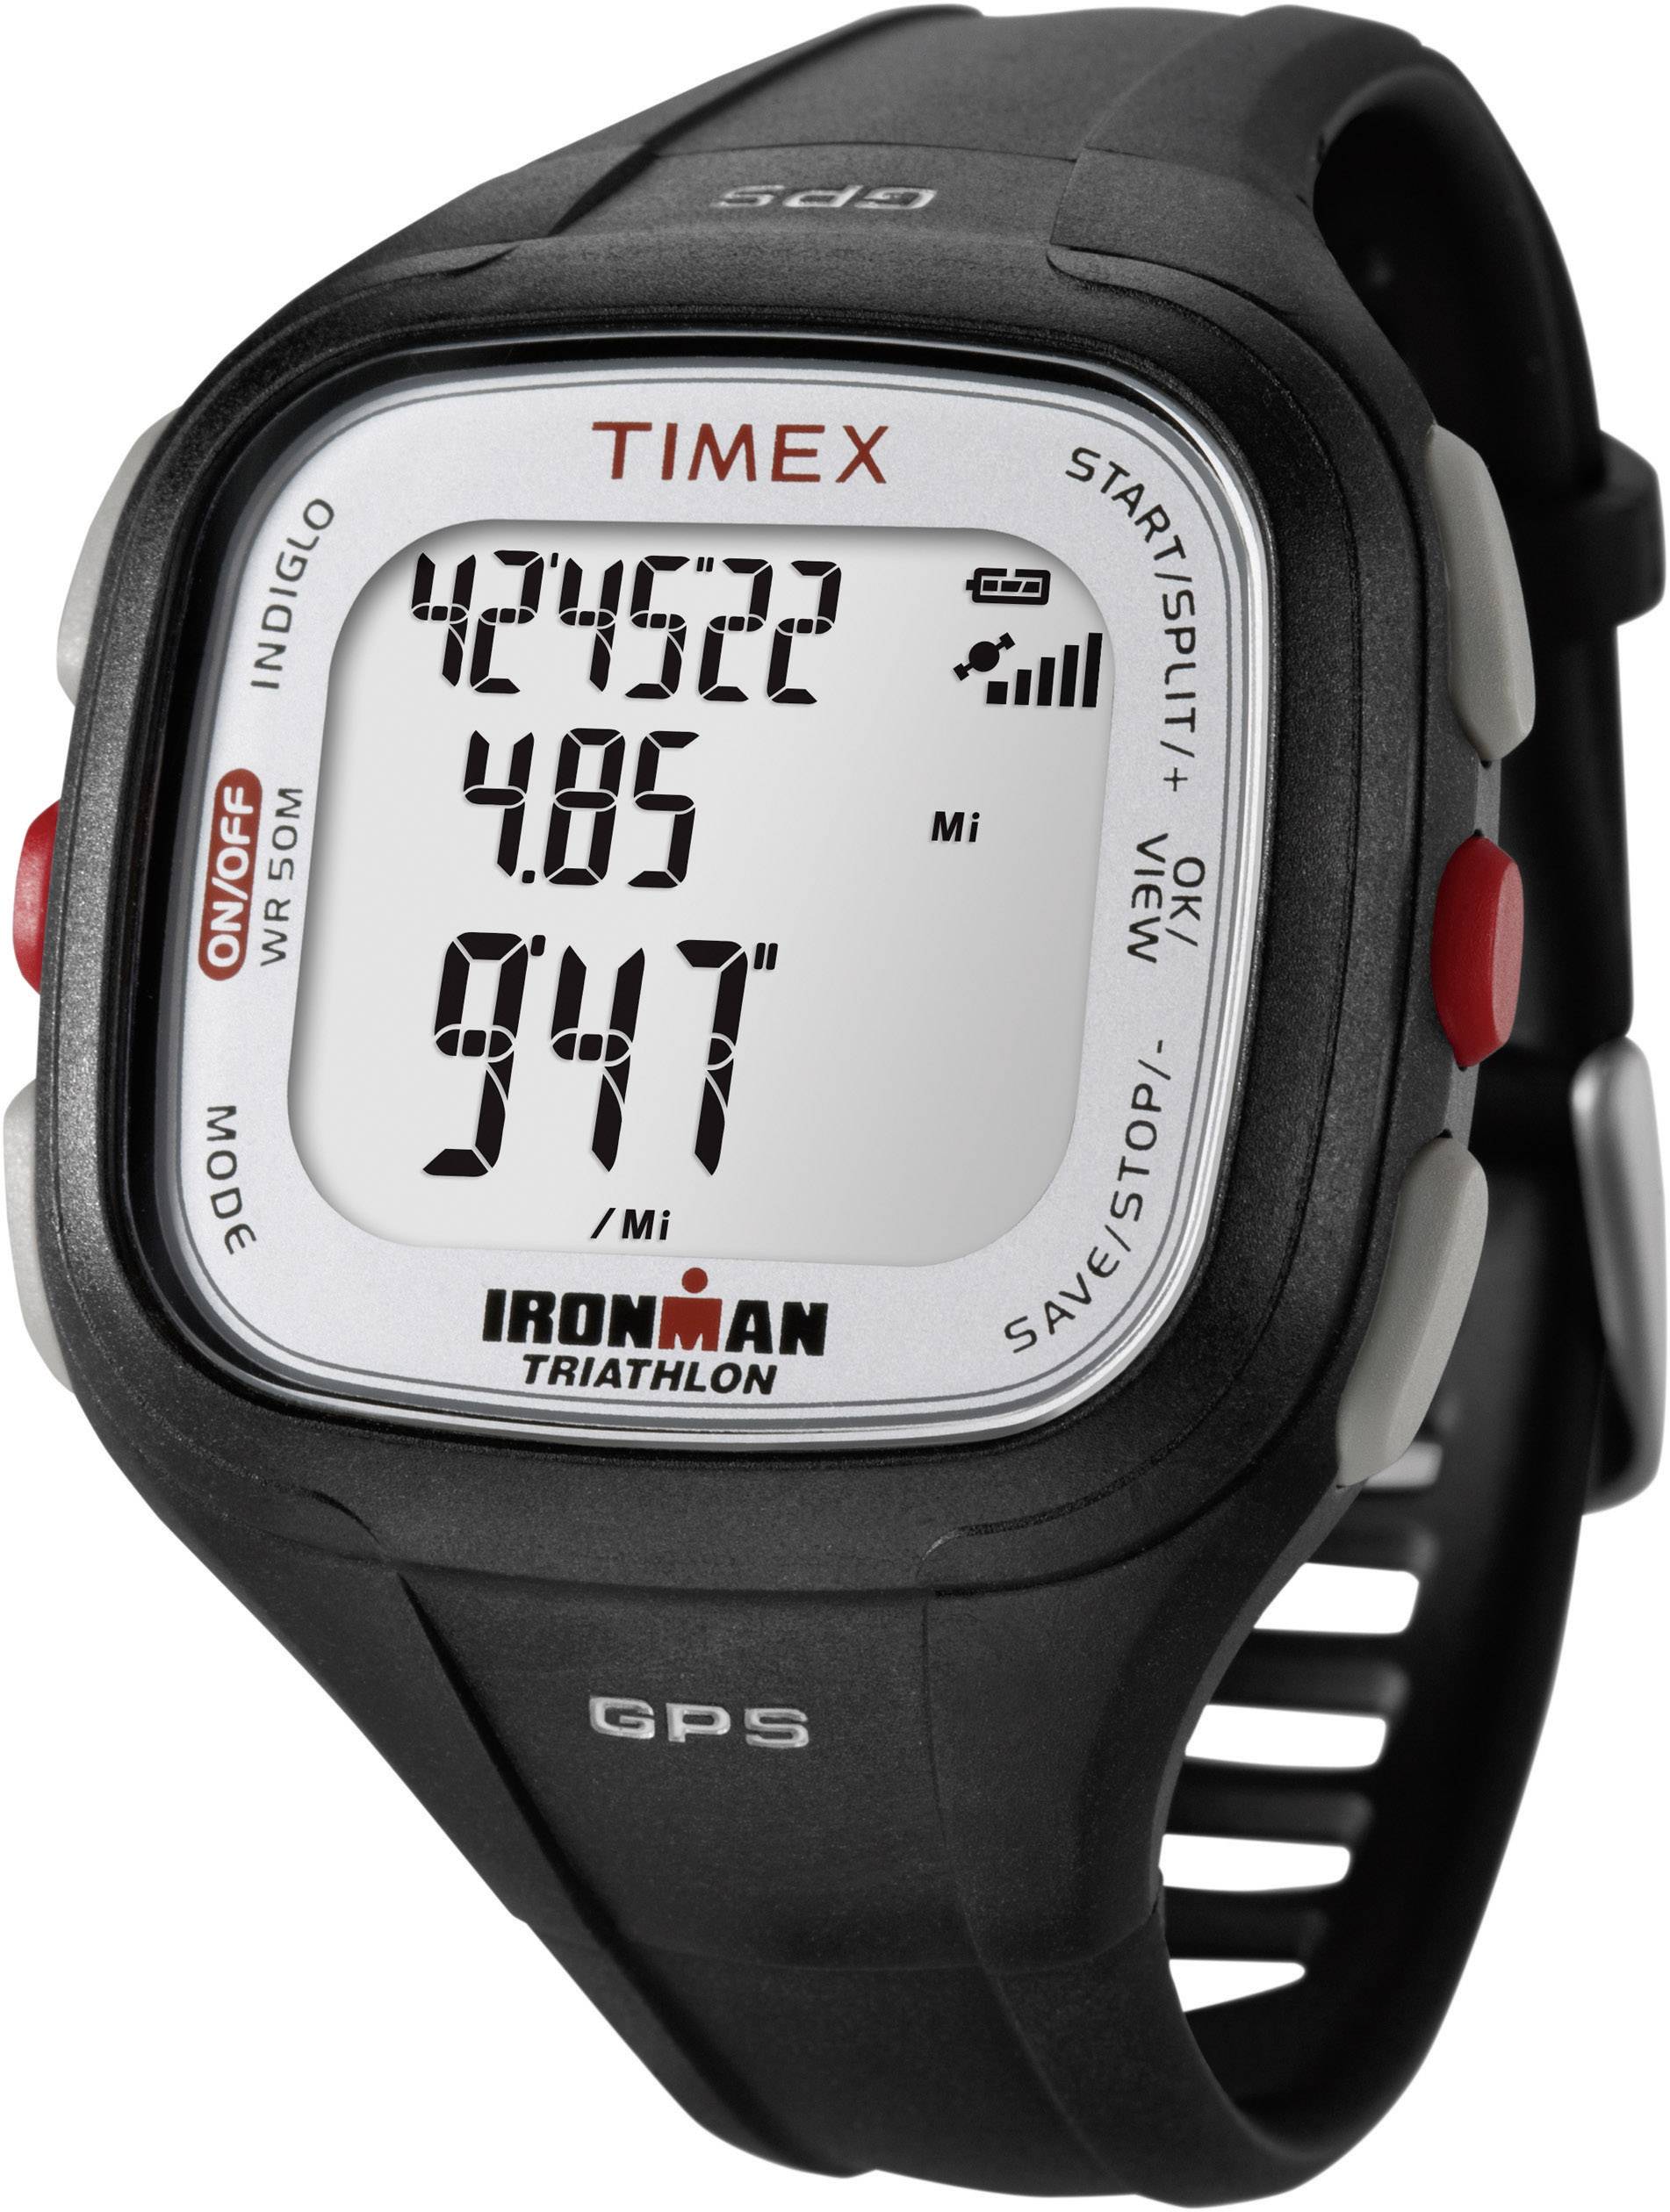 Barmhartig trommel veronderstellen Timex GPS-sporthorloge | Conrad.nl